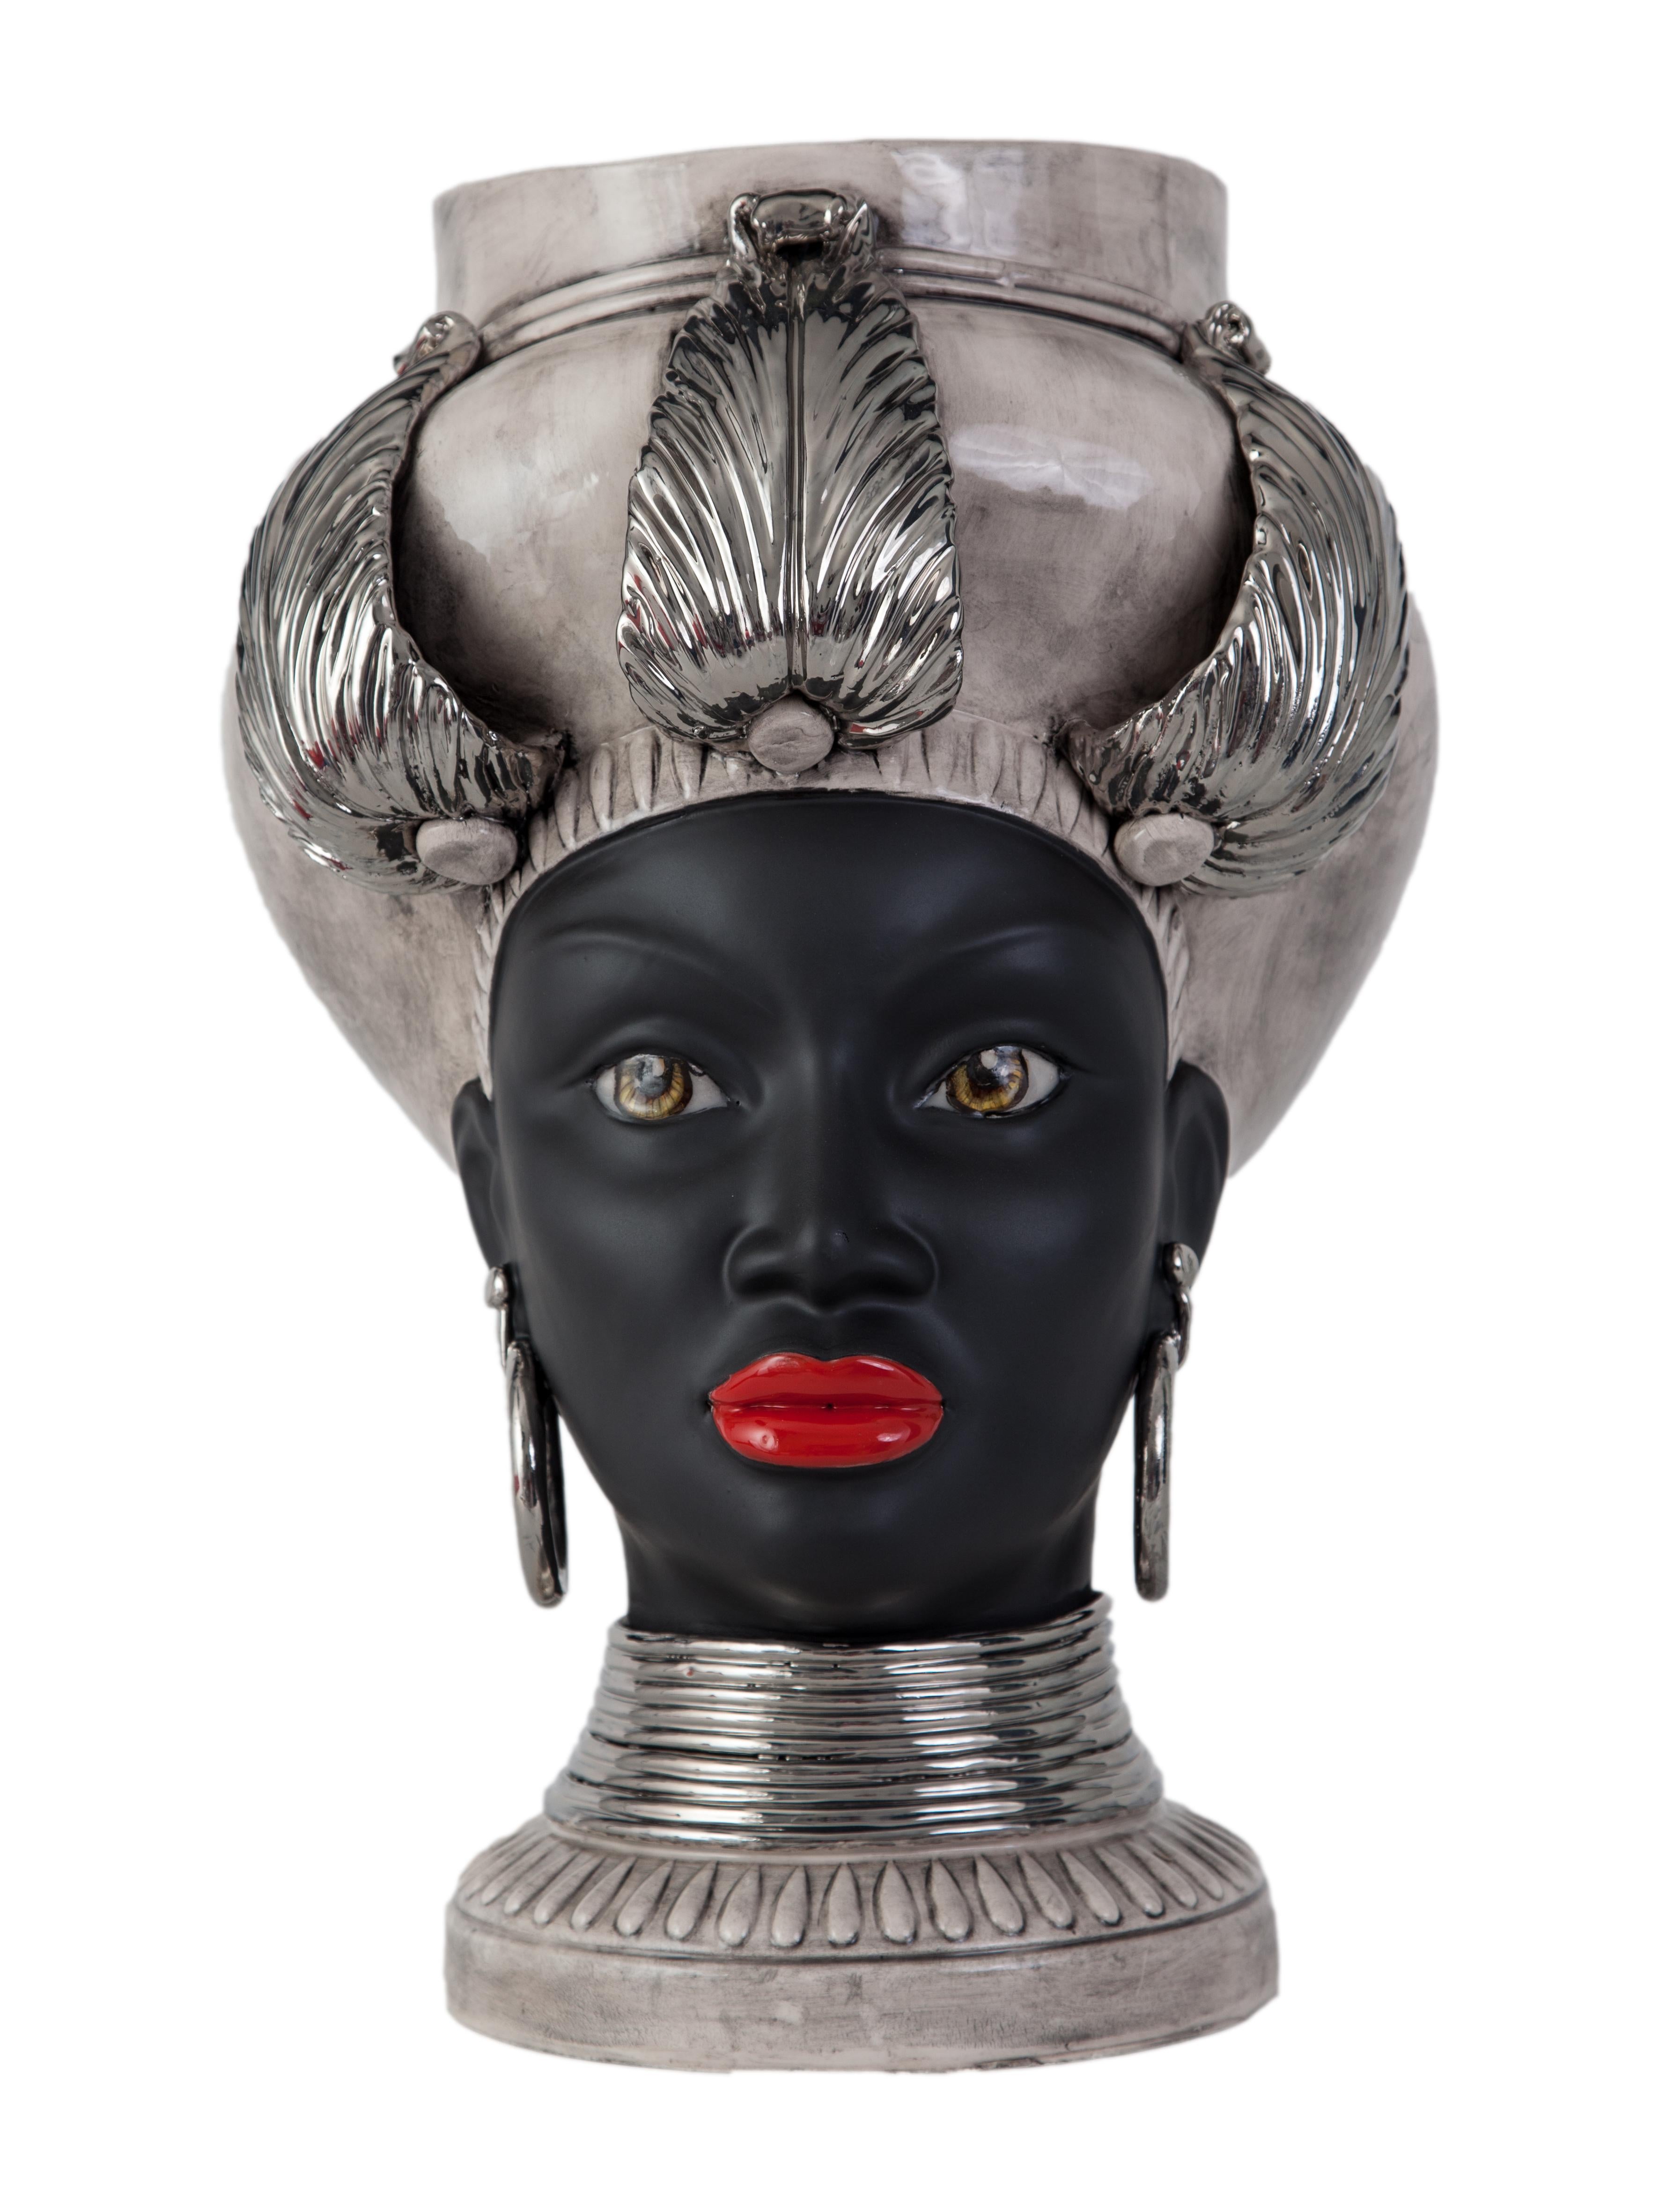 ISIDE I11, Moorish Head, Handmade in Sicily, 2021, Centerpiece, Size M For Sale 11